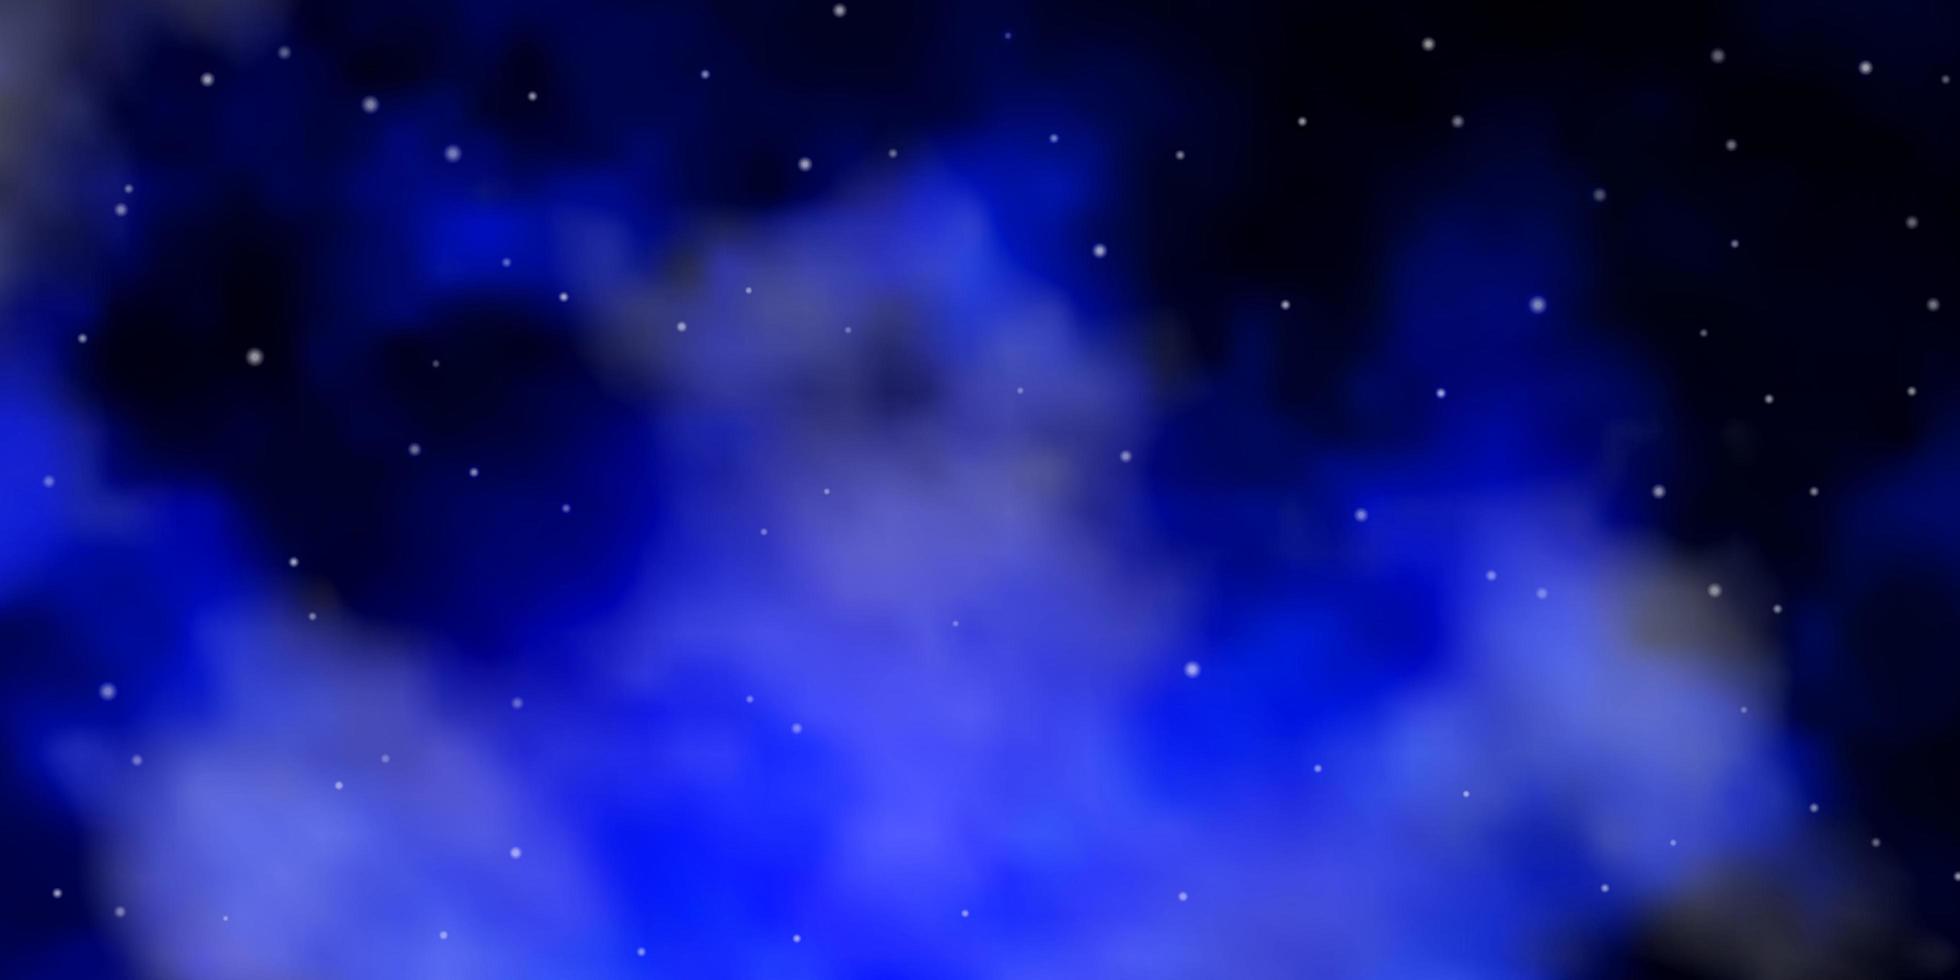 Dark BLUE vector template with neon stars.